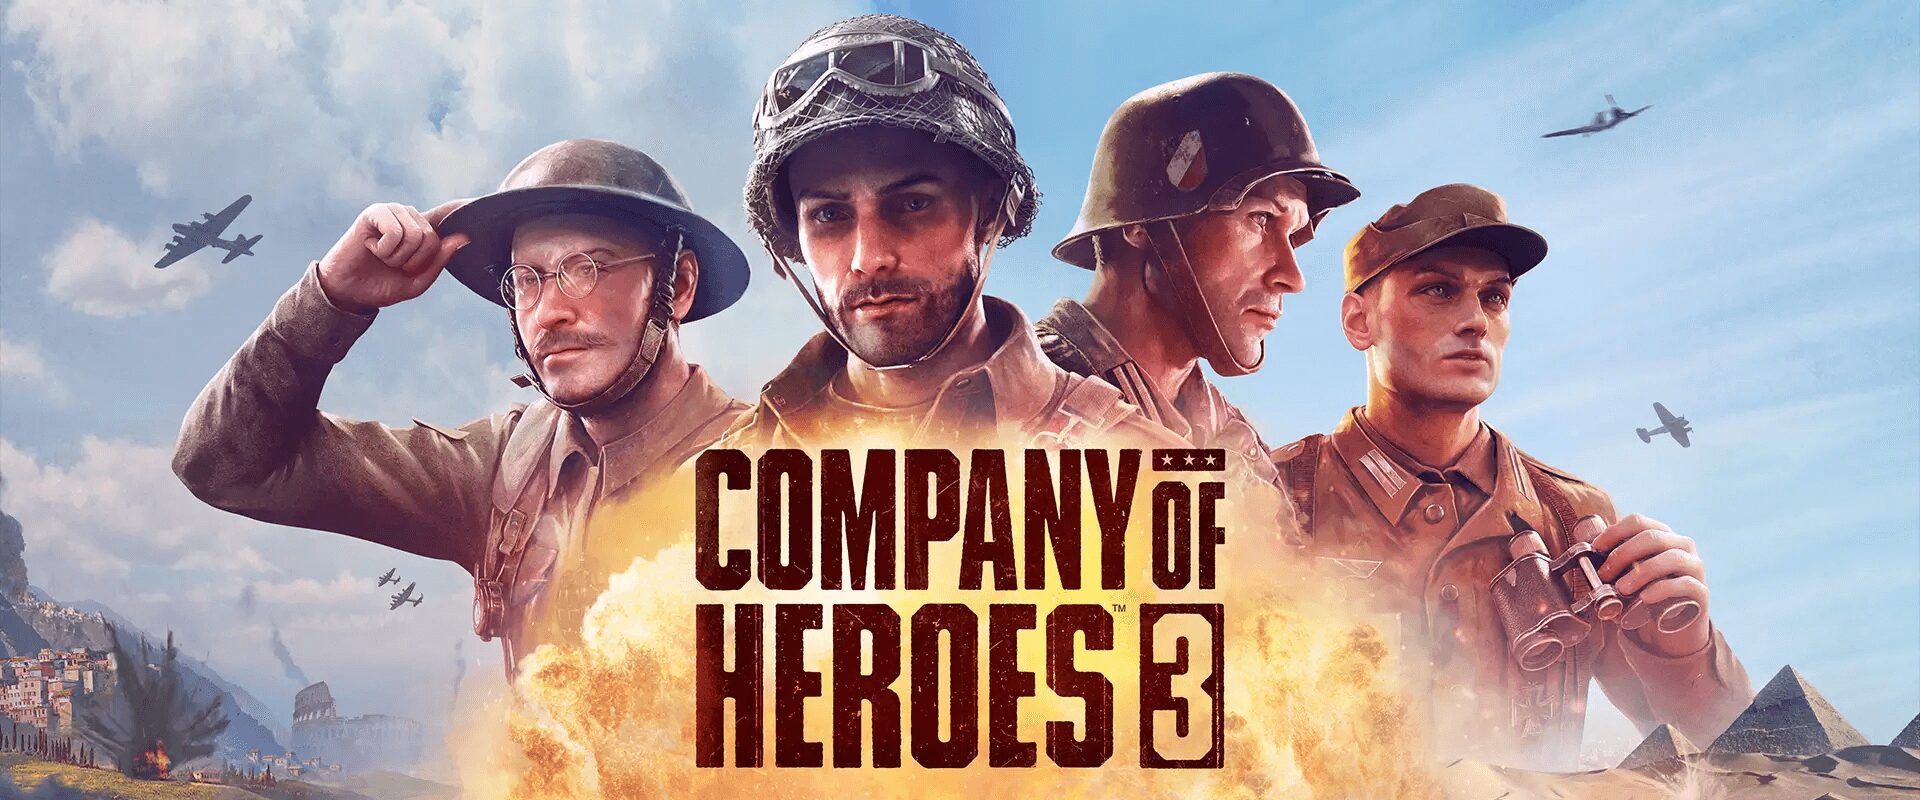 1762514 company of heroes 3 1920x800 1